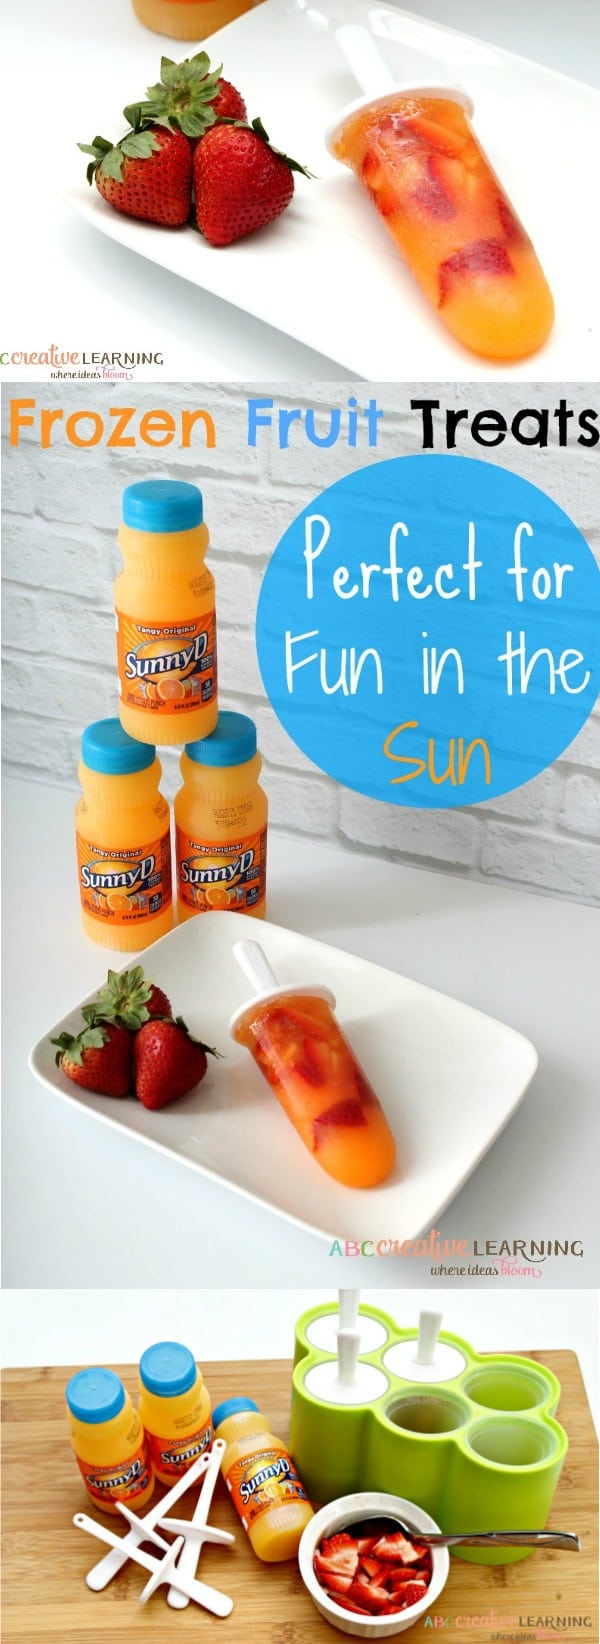 Frozen Orange Juice Fruit Treat | Perfect for Fun in the Sun